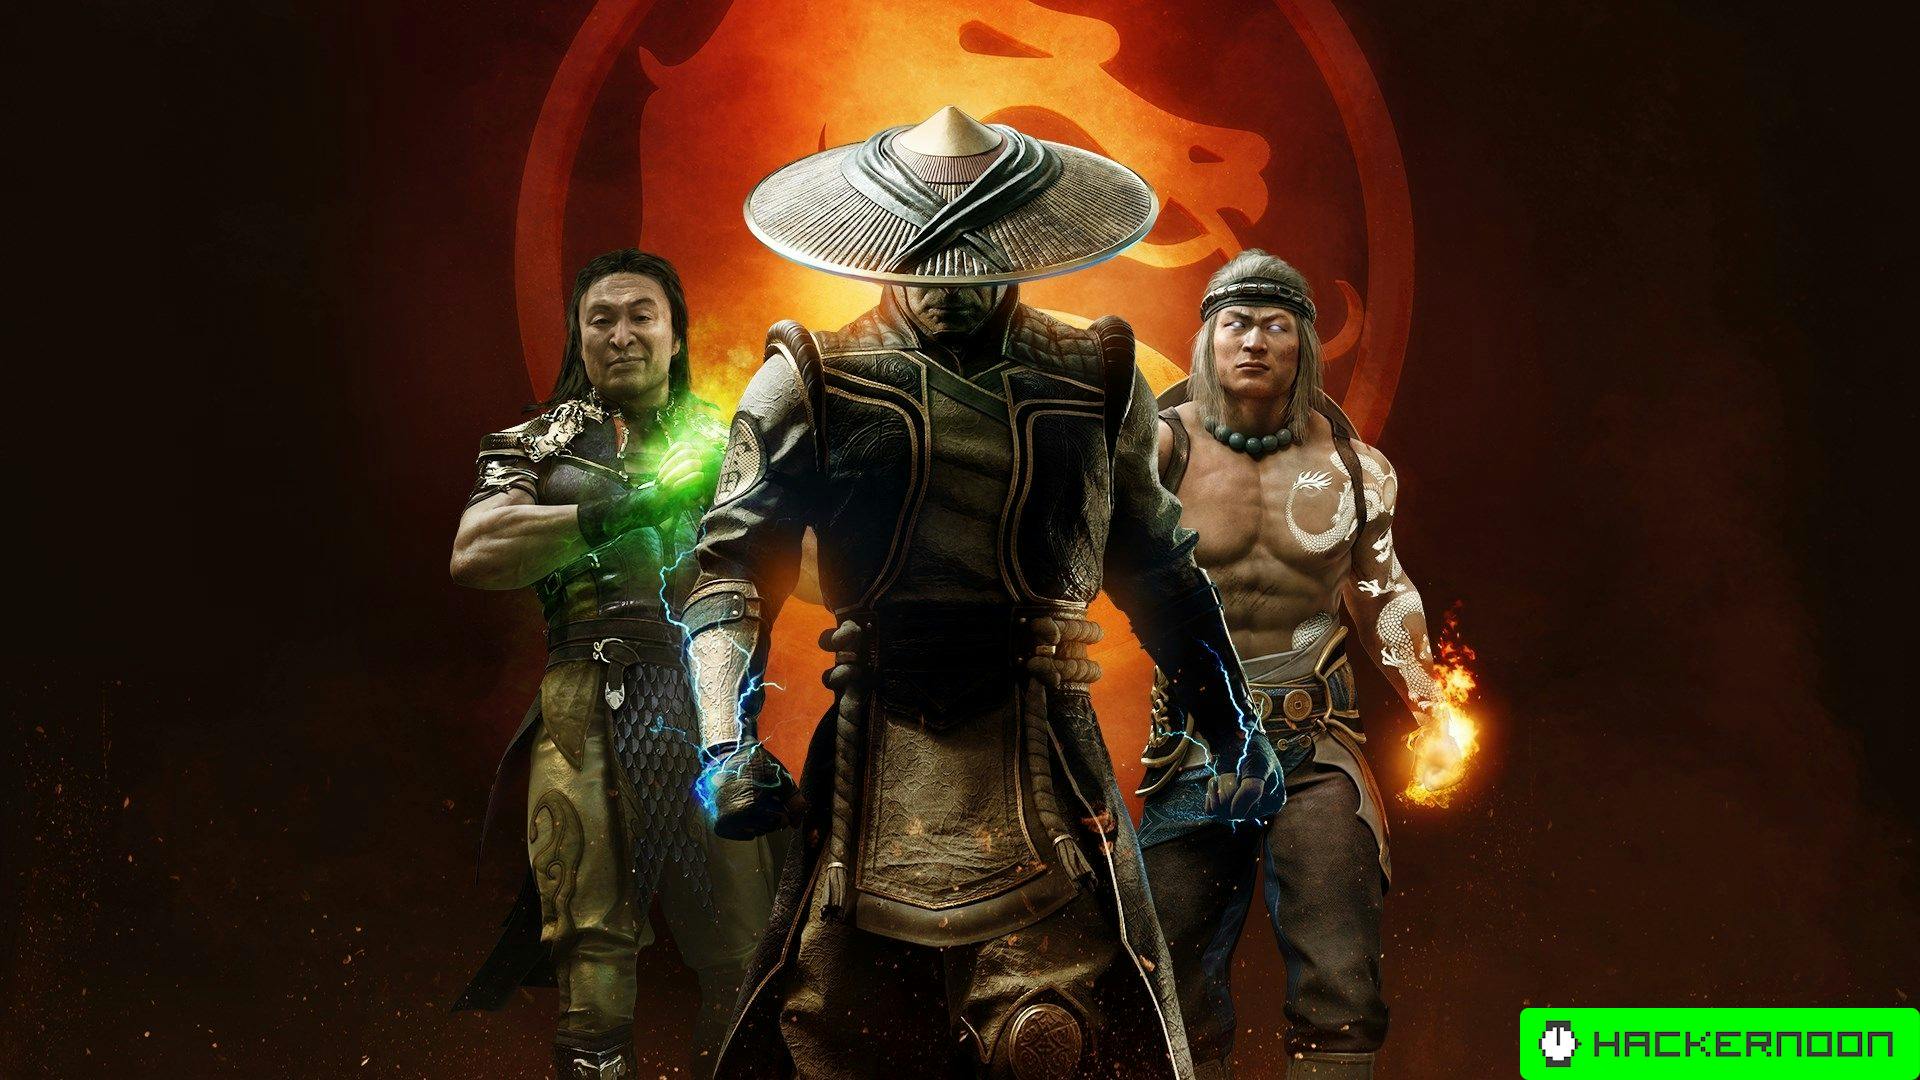 Mortal Kombat 1 Trailer - Who does Shang Tsung kill? - Niche Gamer